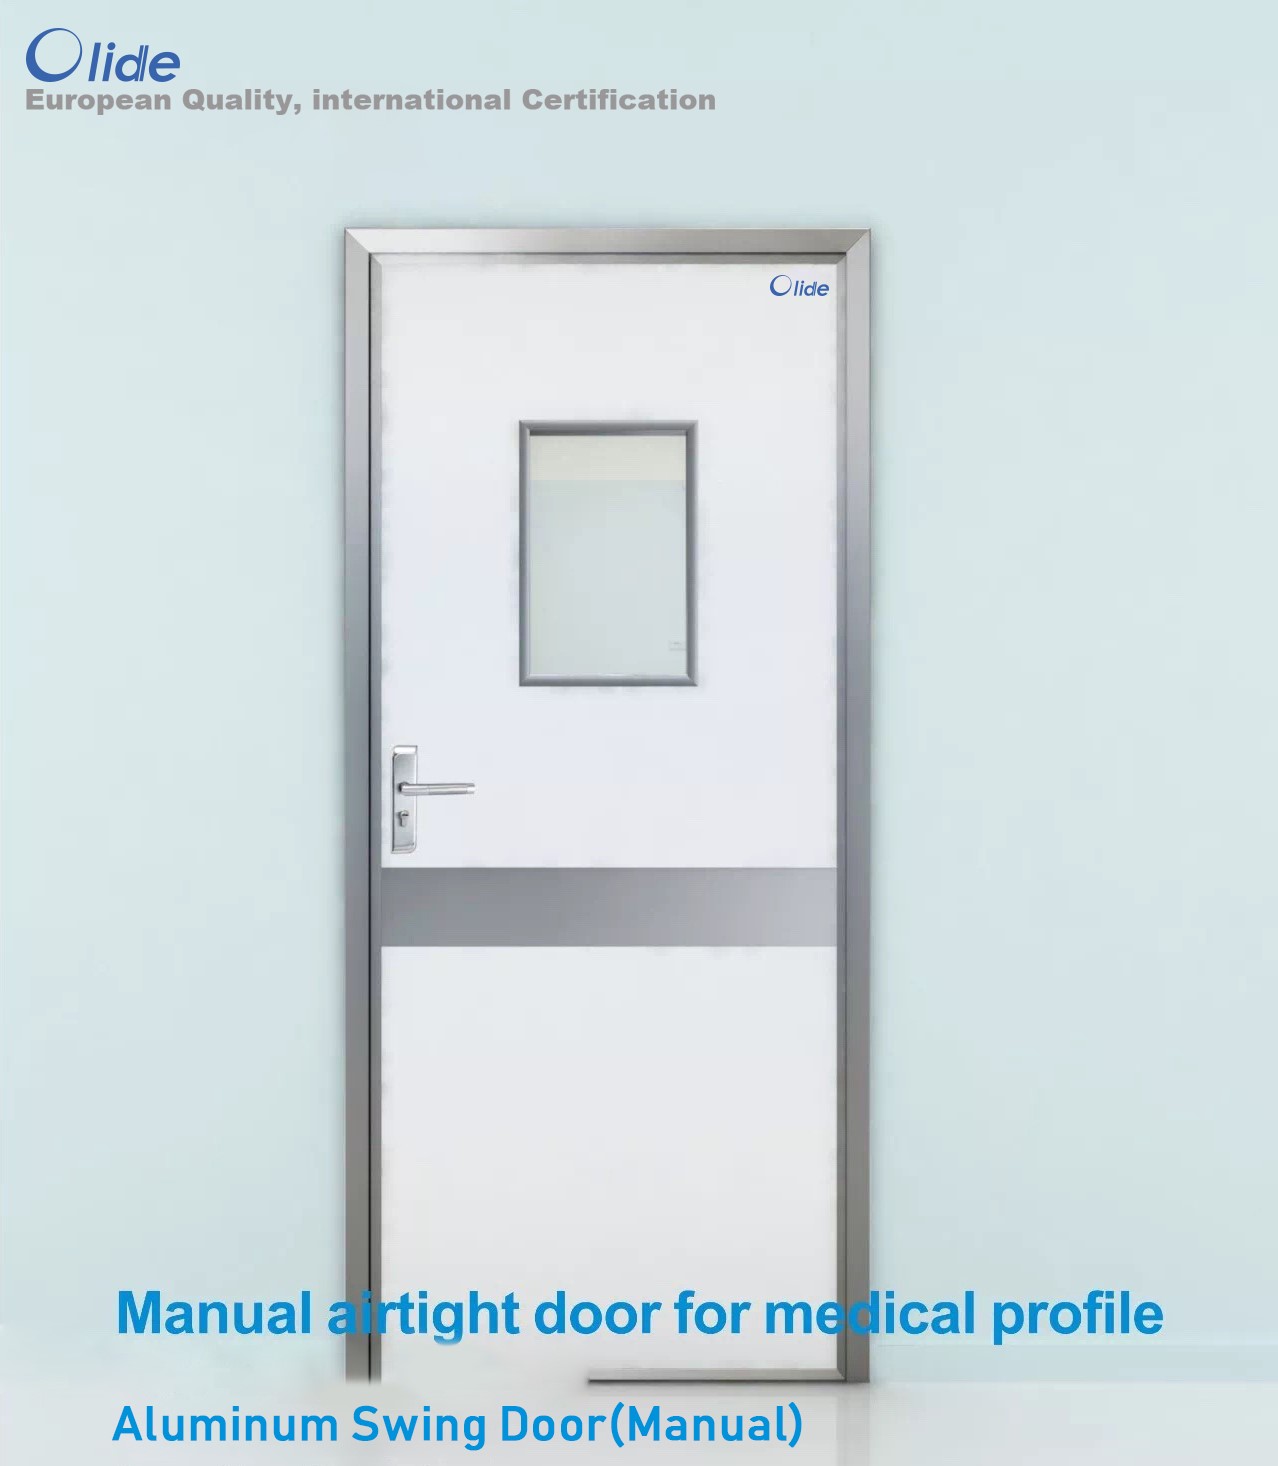 manual airight Aluminum swing door for medicial profile